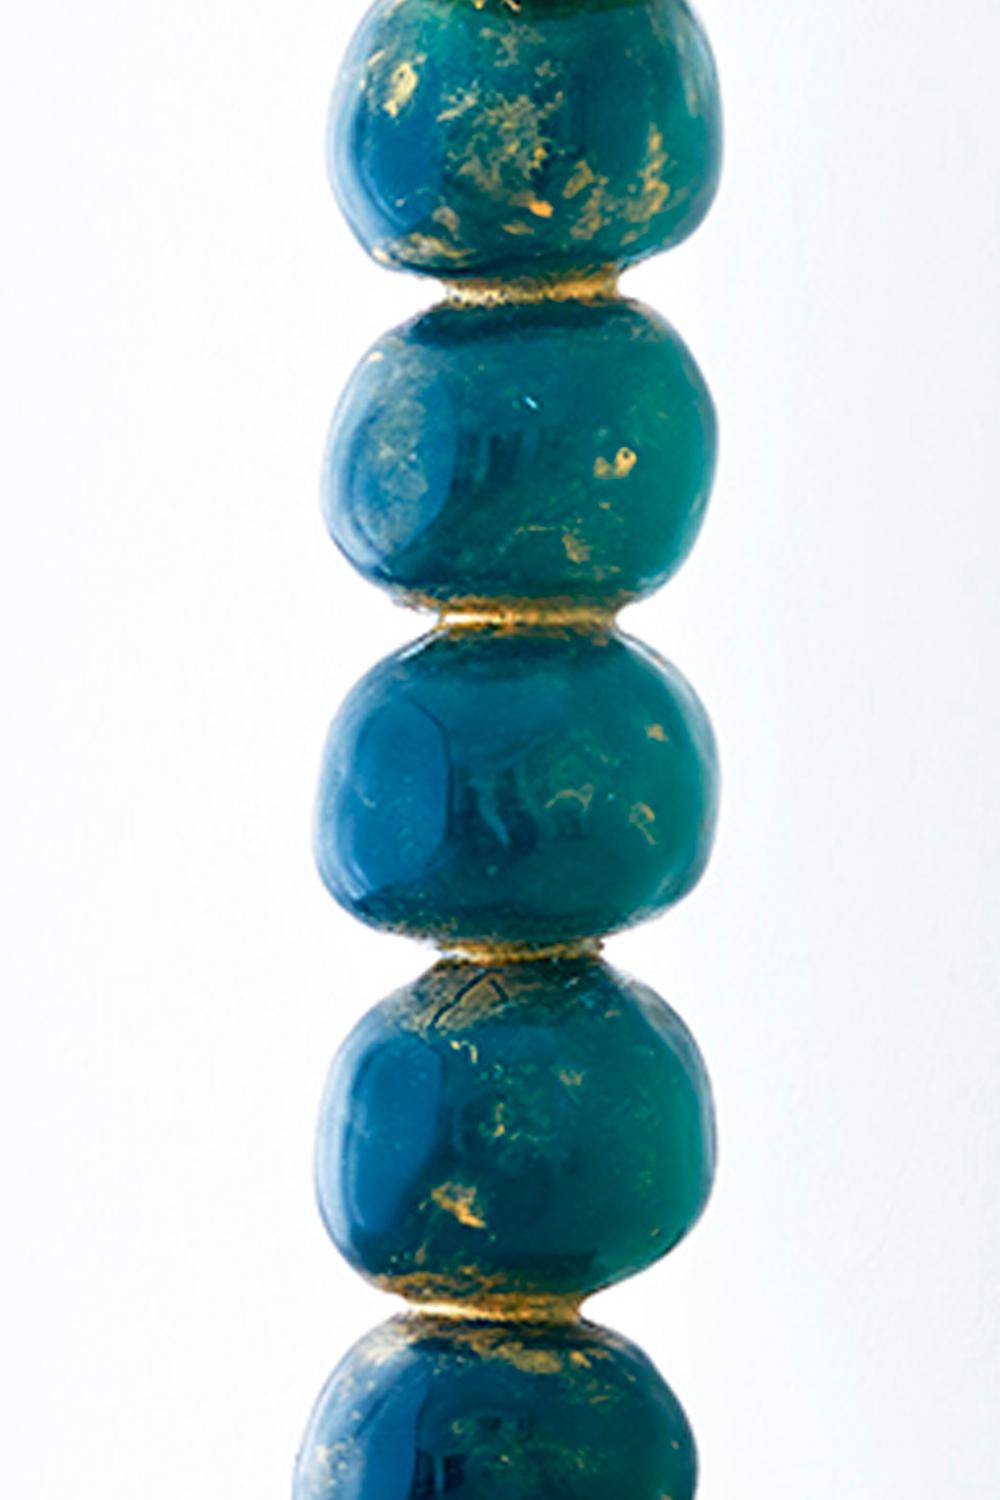 Modern Turquoise Sculptural Candlestick by Margit Wittig